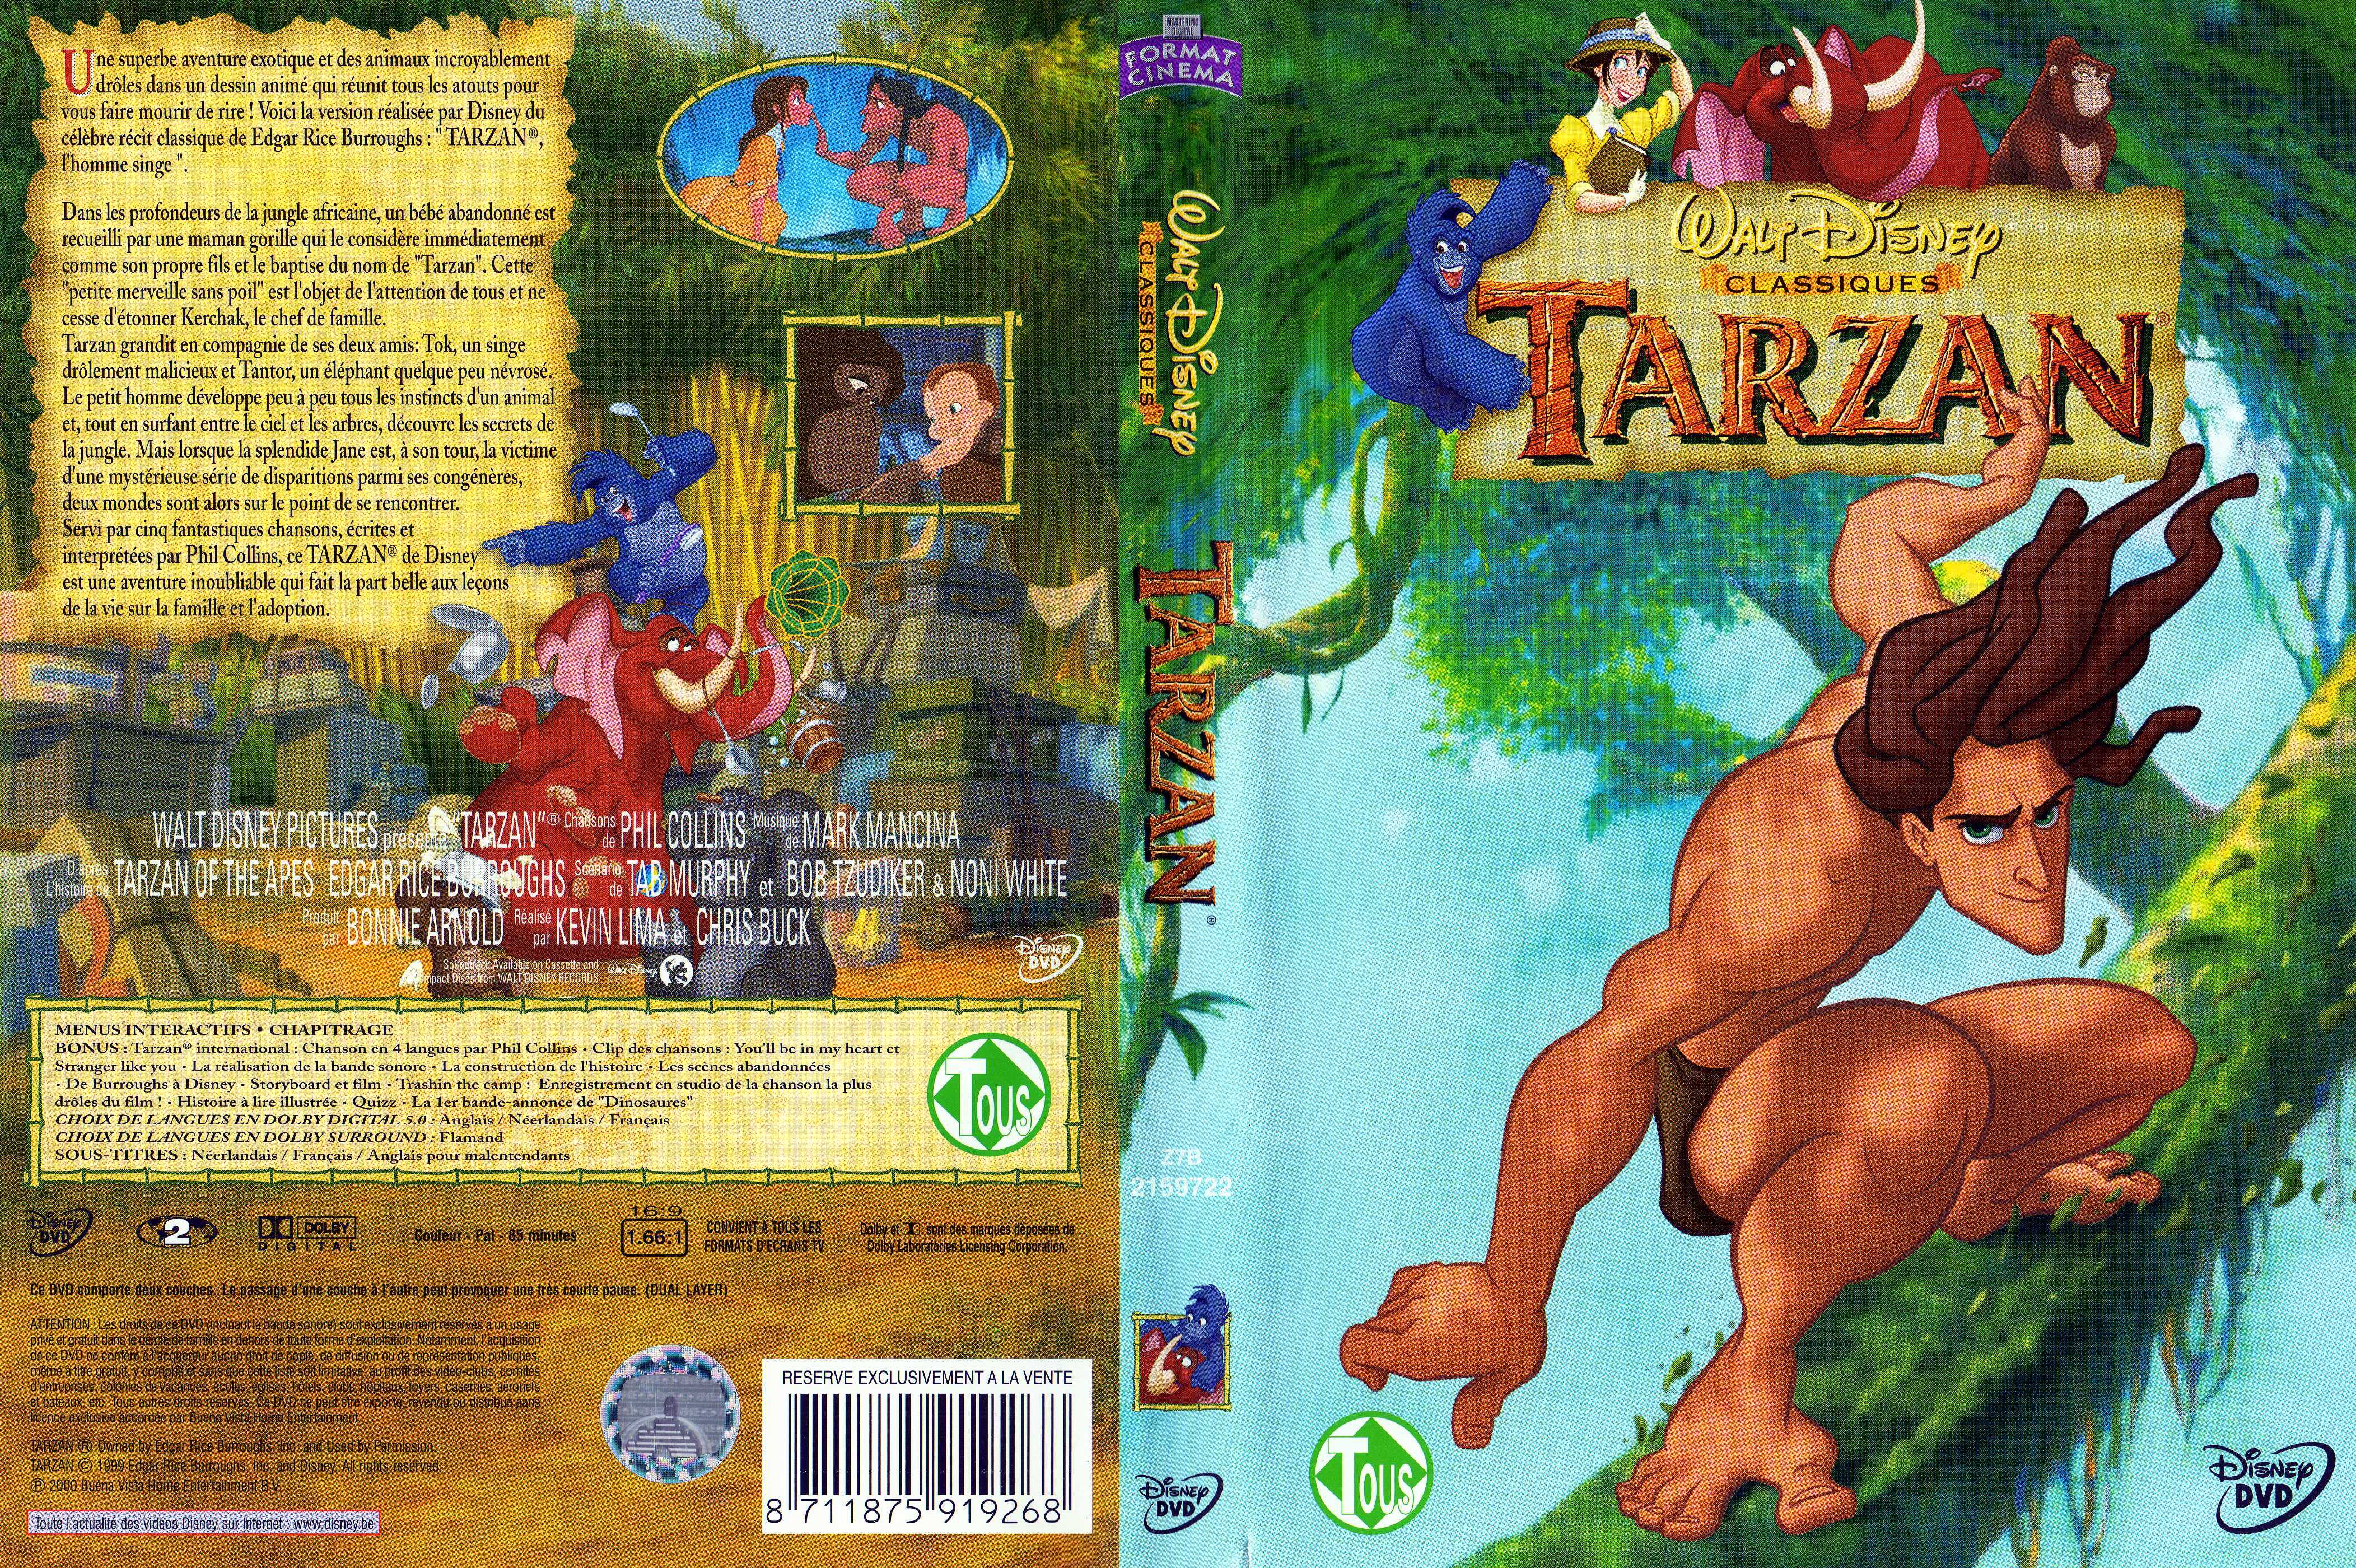 Jaquette DVD Tarzan v2